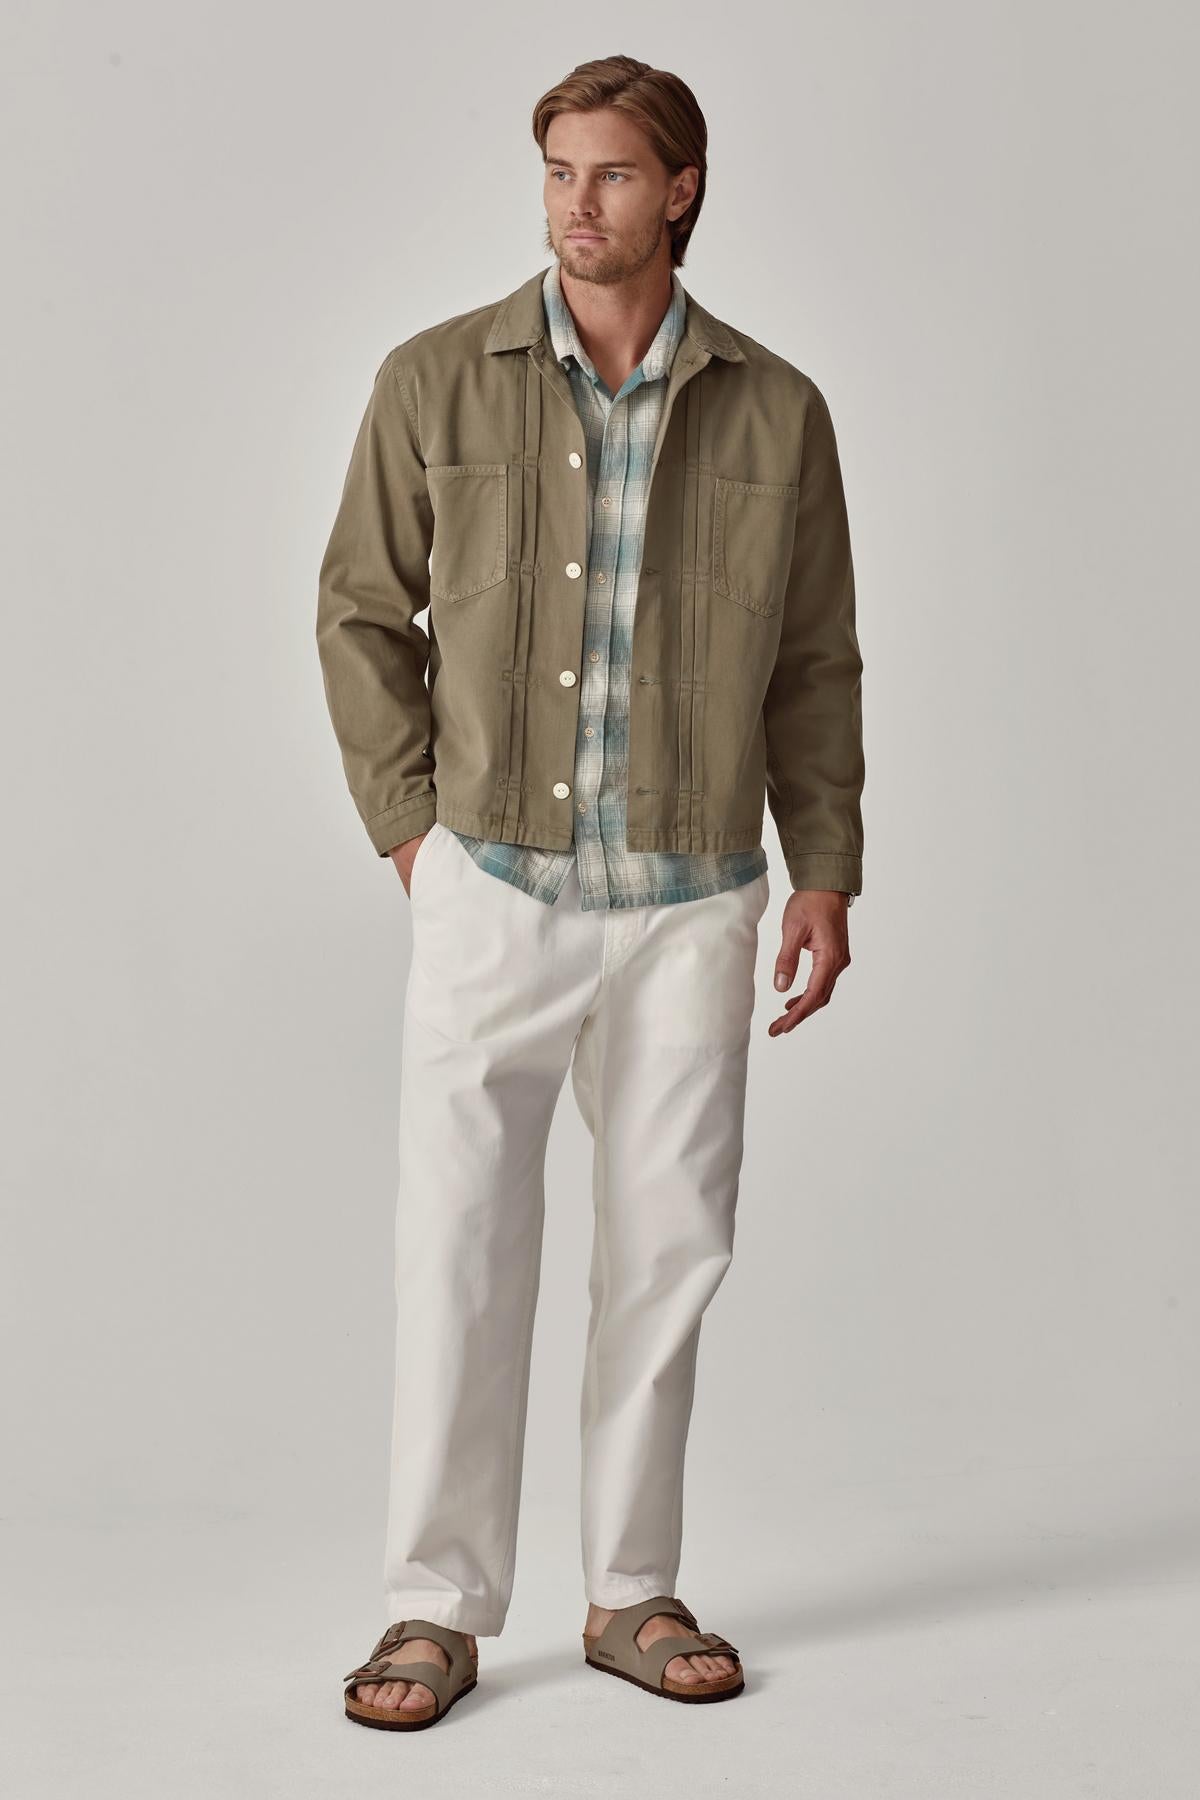 A man wearing a versatile Velvet by Graham & Spencer khaki jacket and white pants.-36212337934529